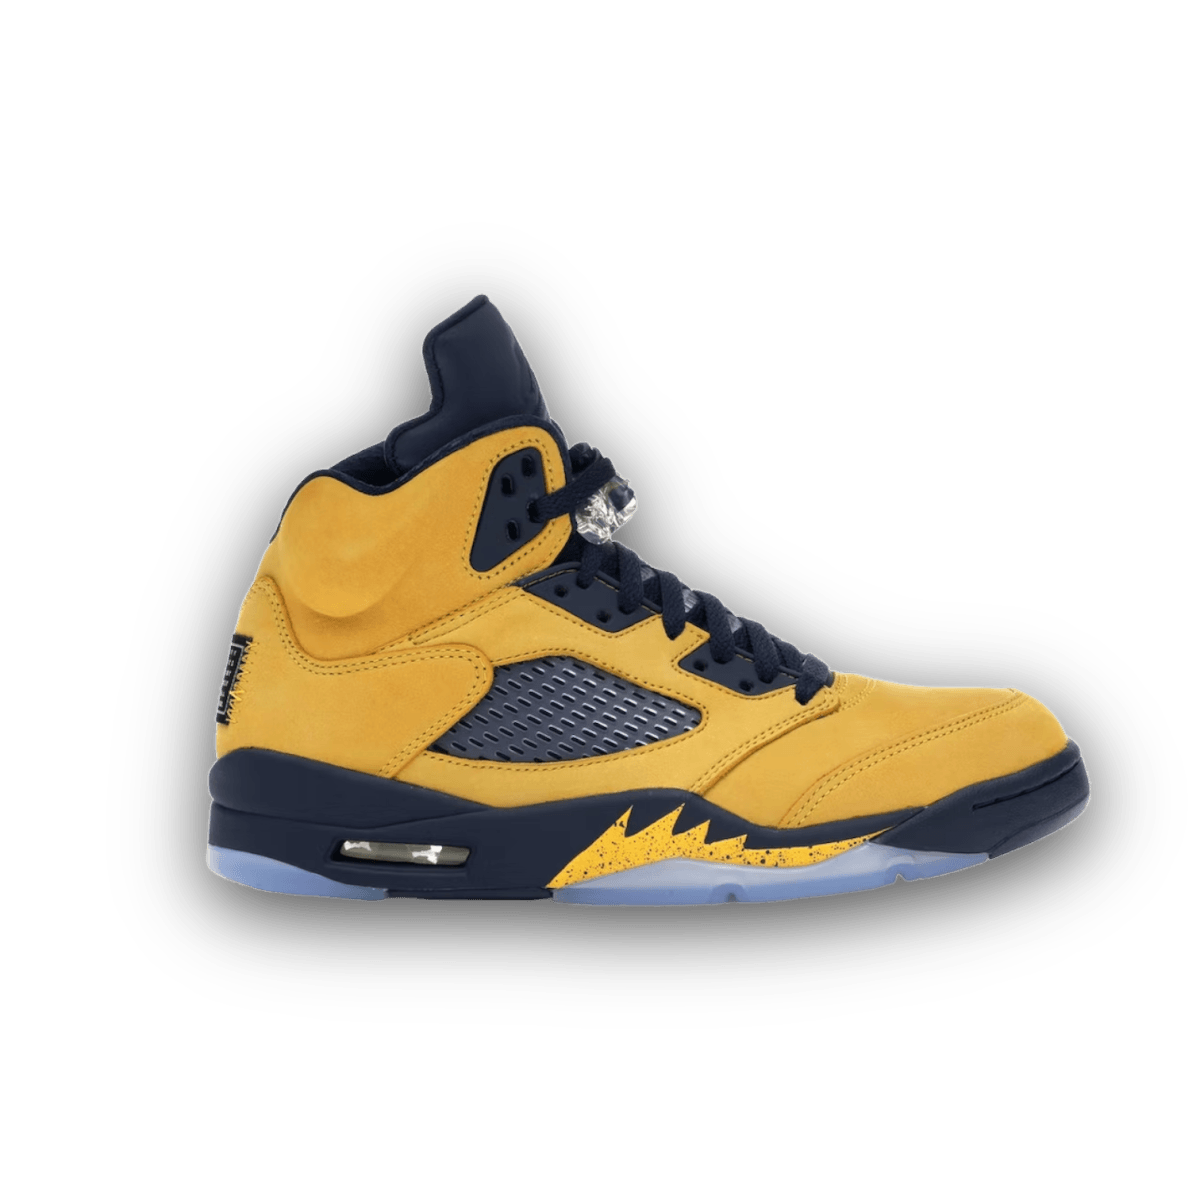 Jordan 5 Retro Michigan (2019) - Mid Sneaker - Jordan - Jawns on Fire